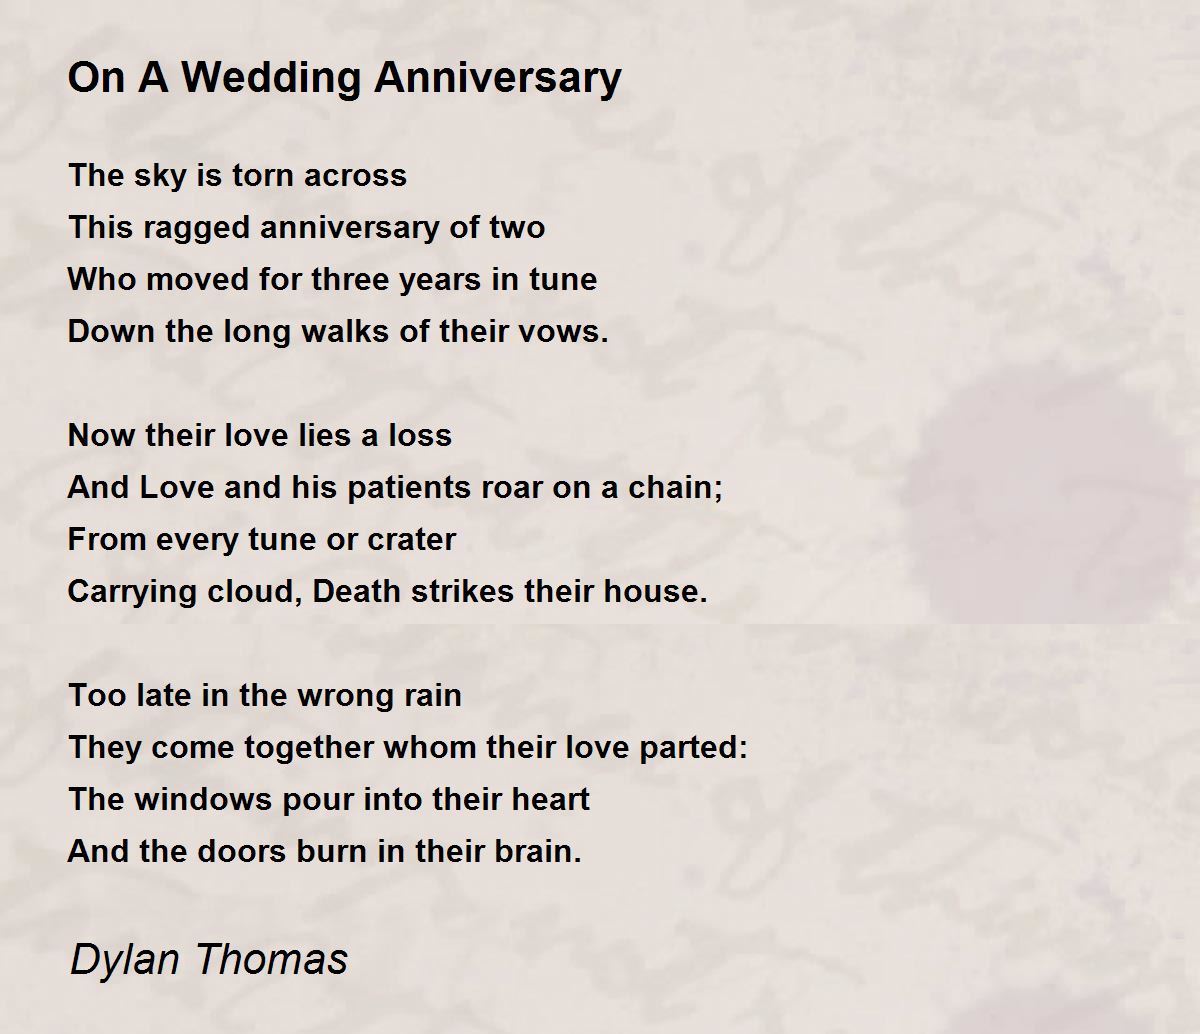 25th anniversary poems